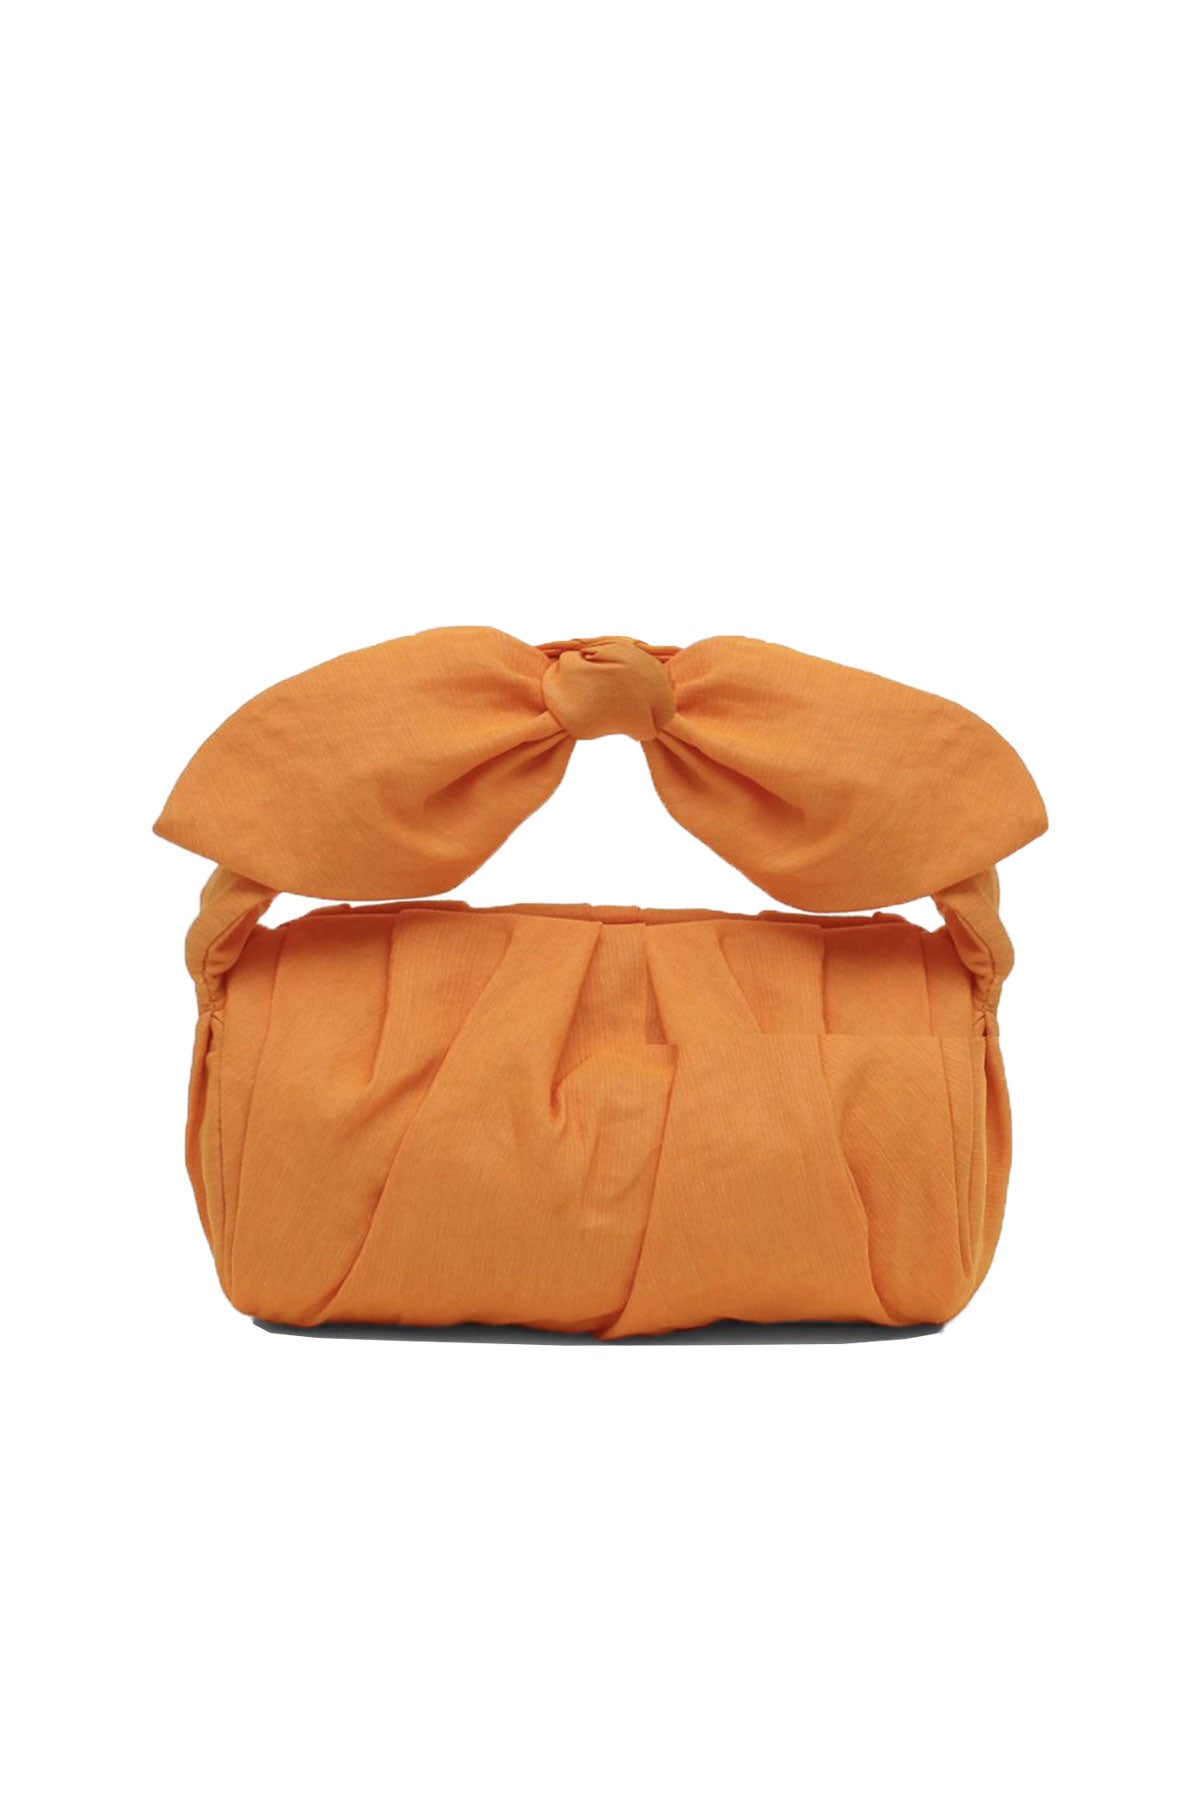 Nane Bag in Orange - shop-olivia.com